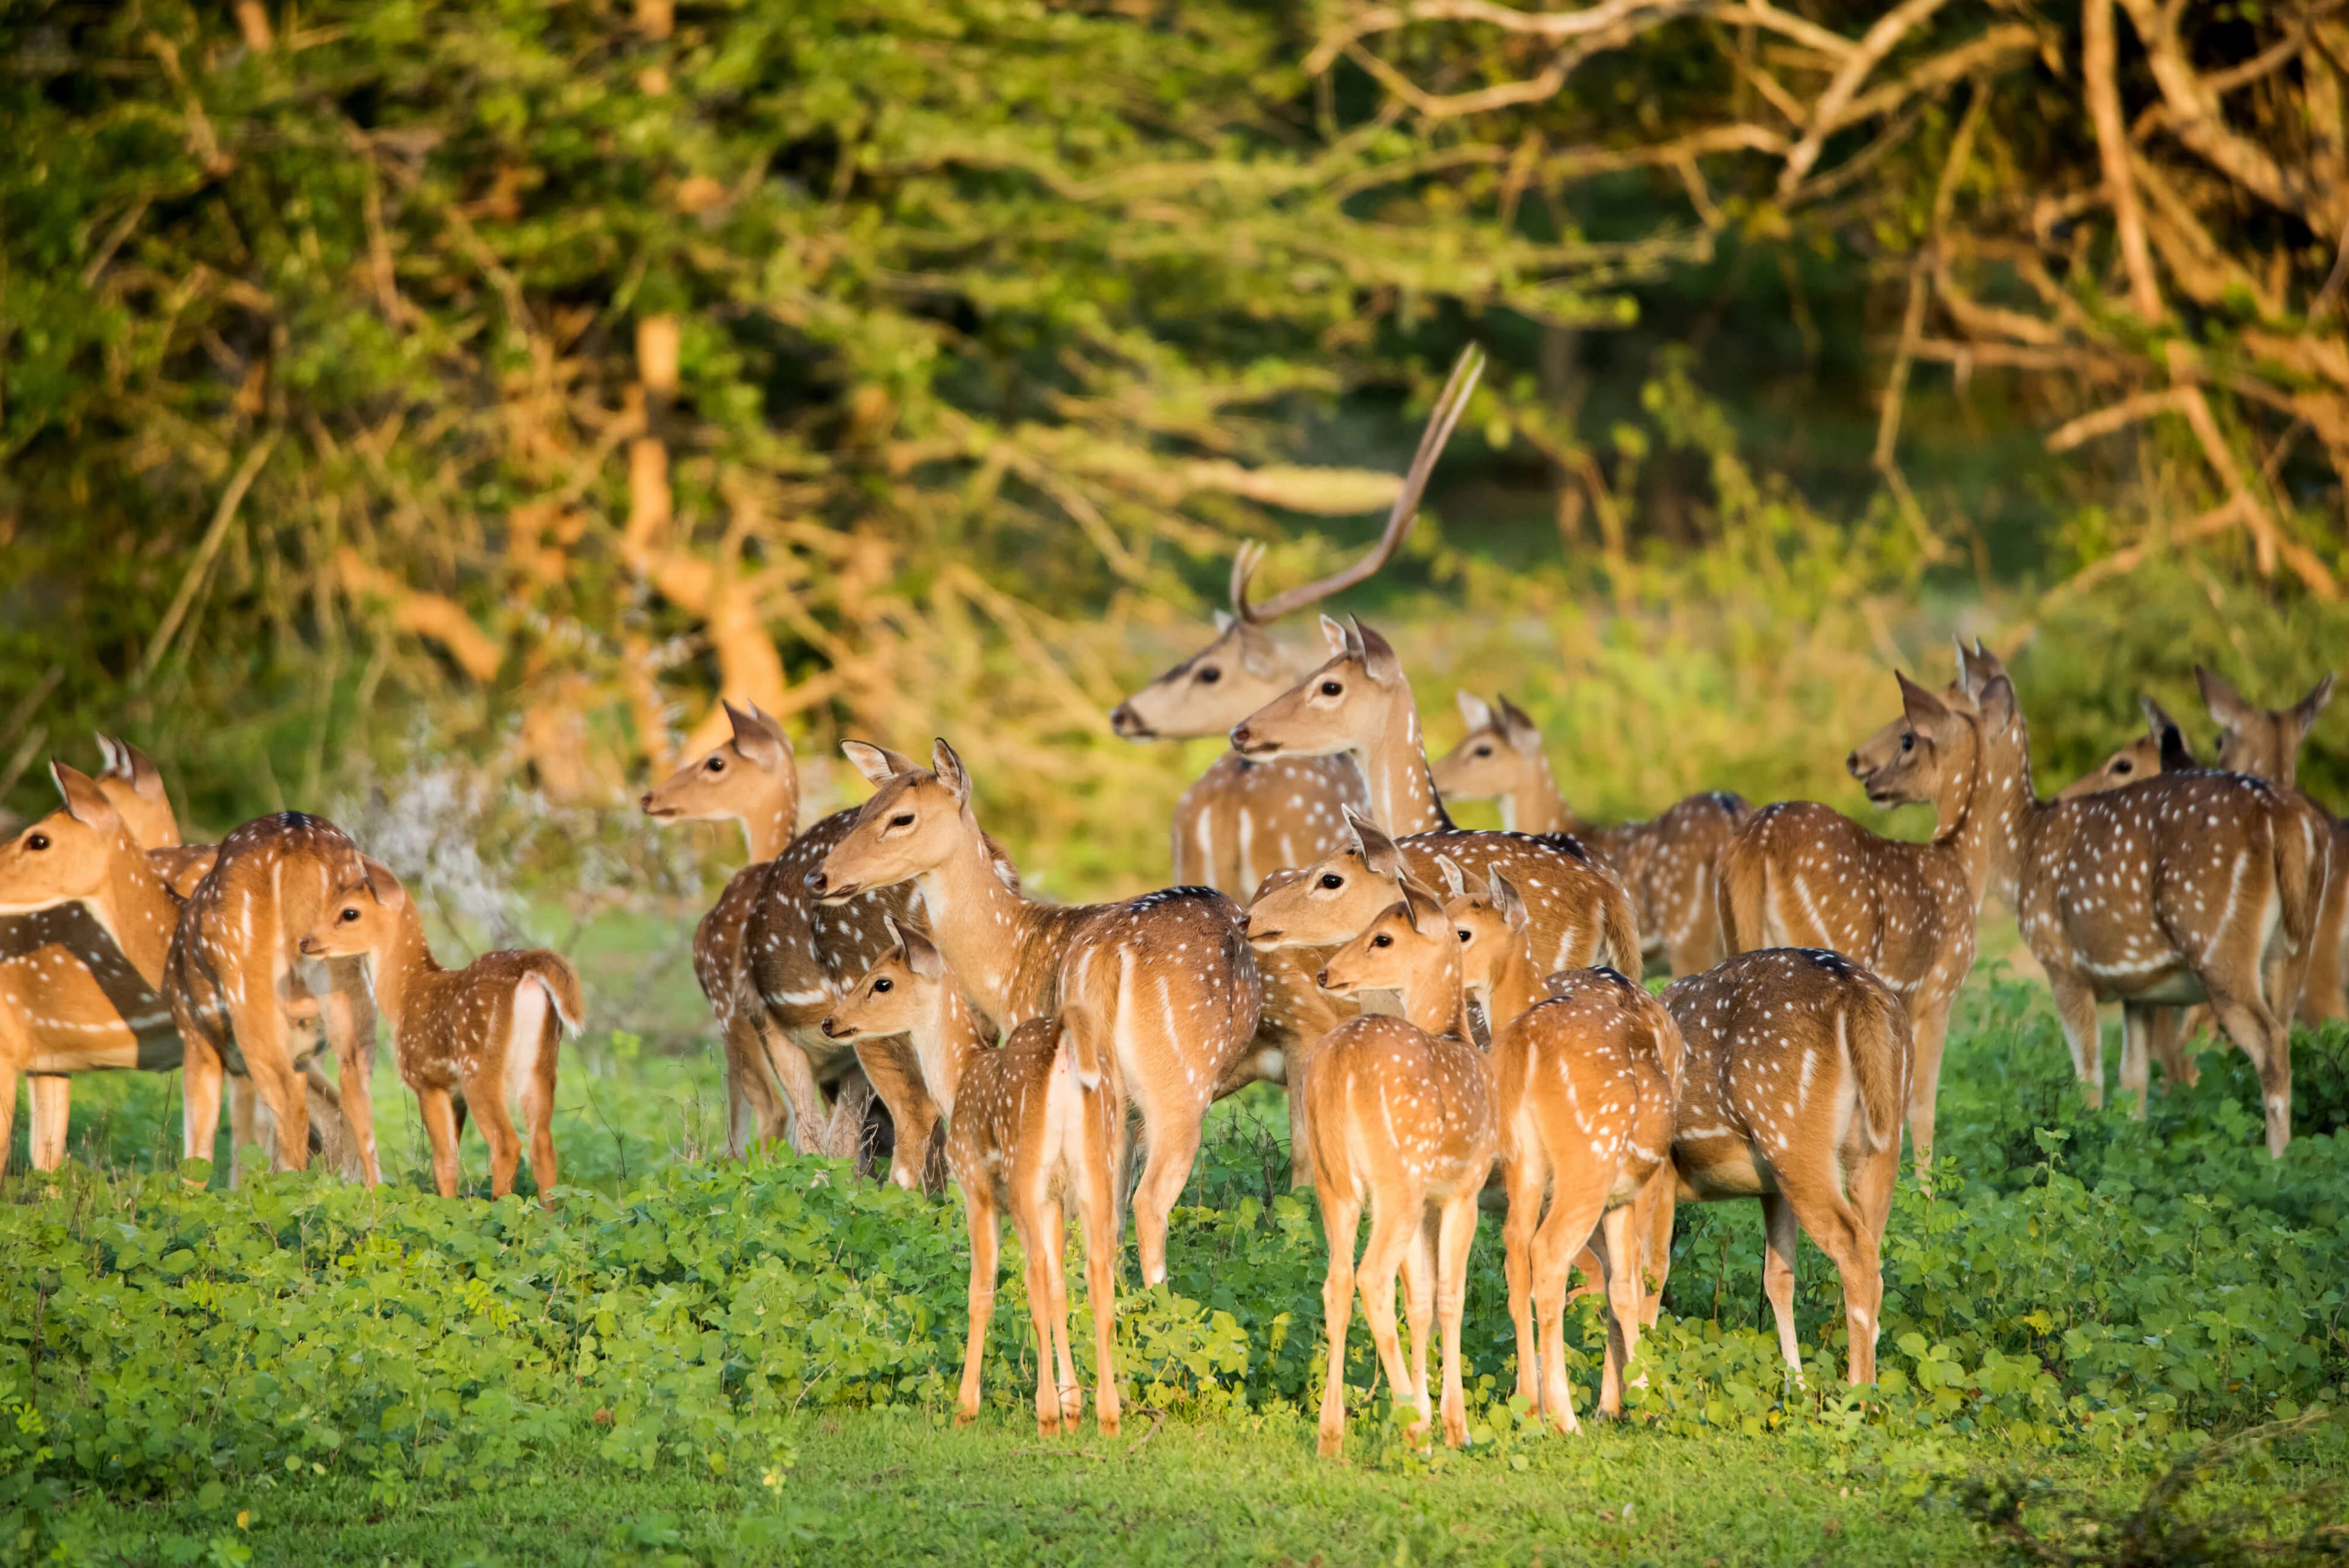 A group of deers at Yala National Park, Sri Lanka.